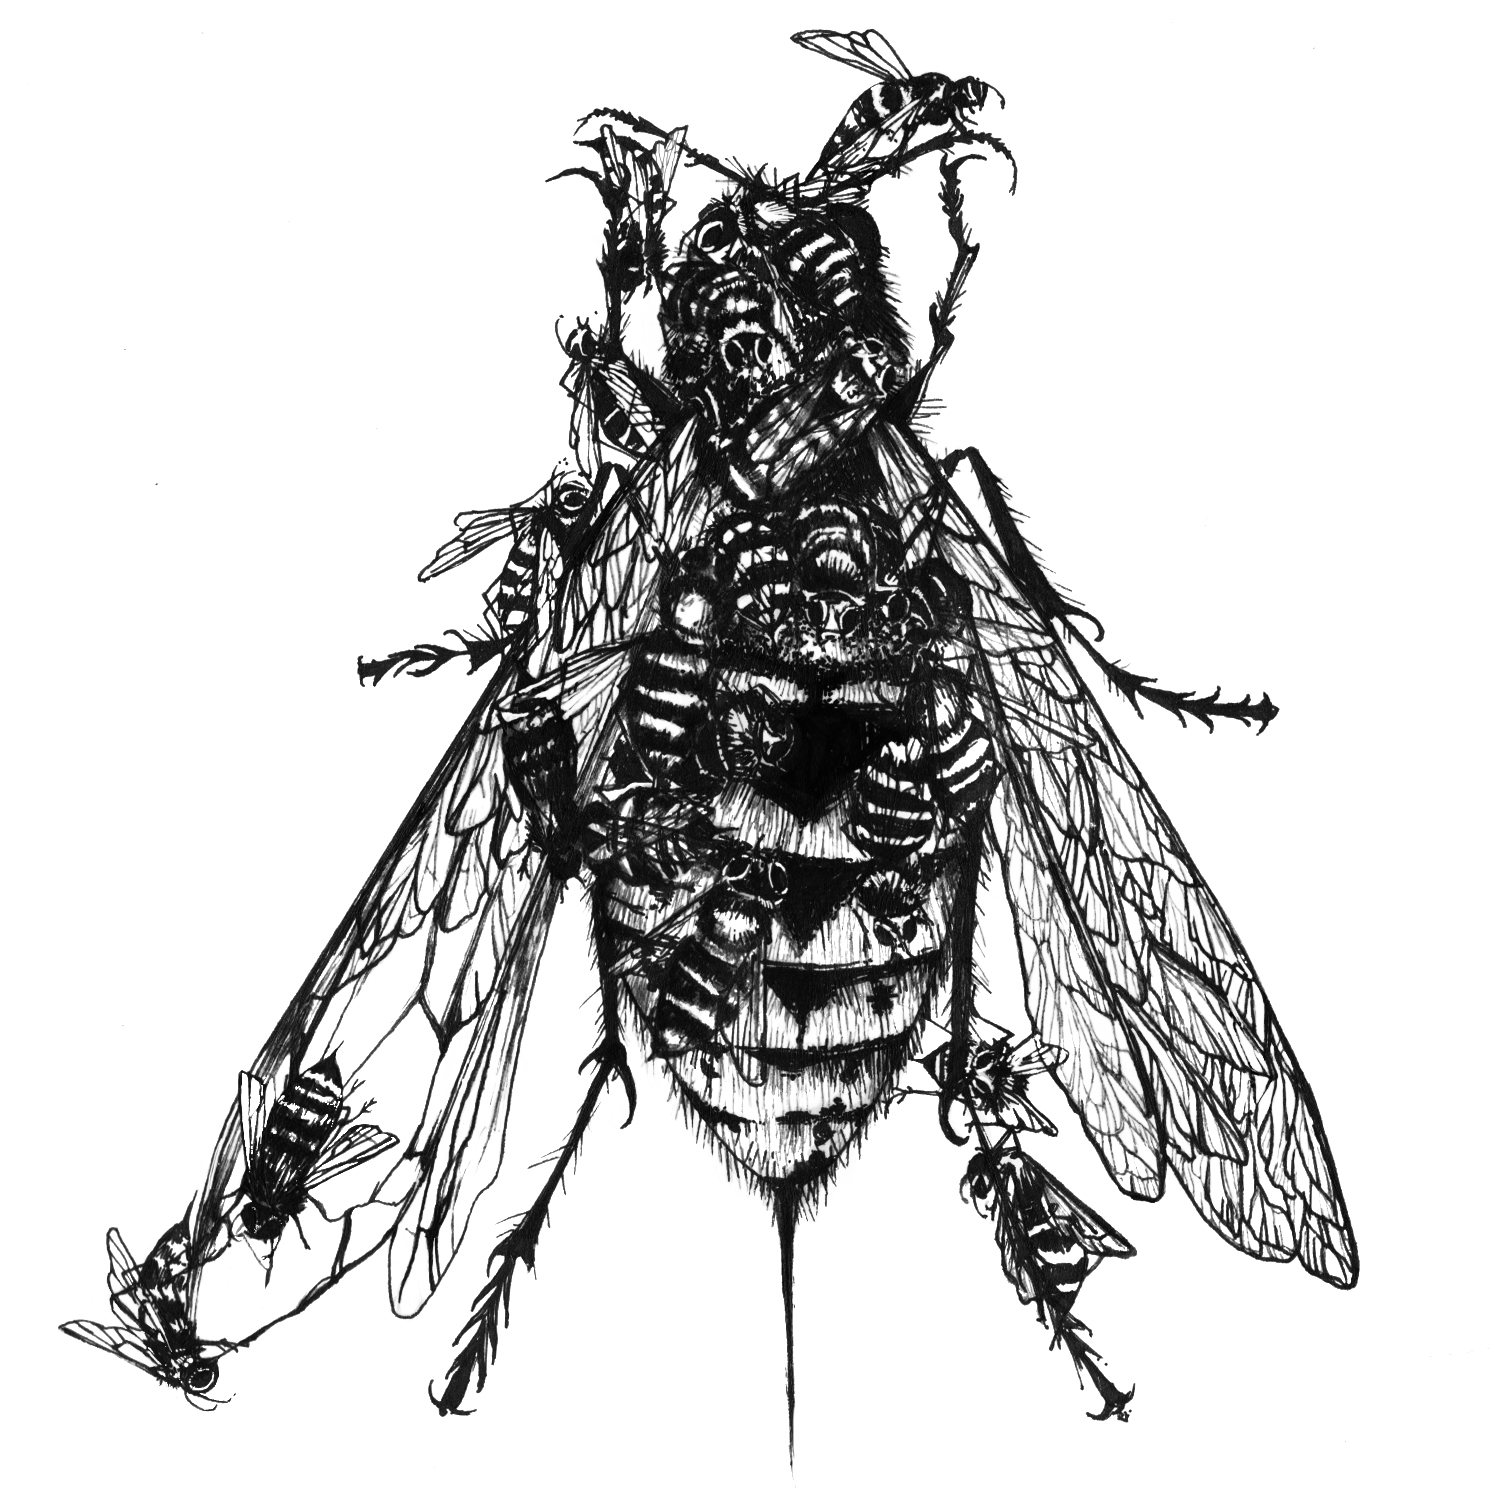 Honey Bee Illustration | Free Download Clip Art | Free Clip Art ...